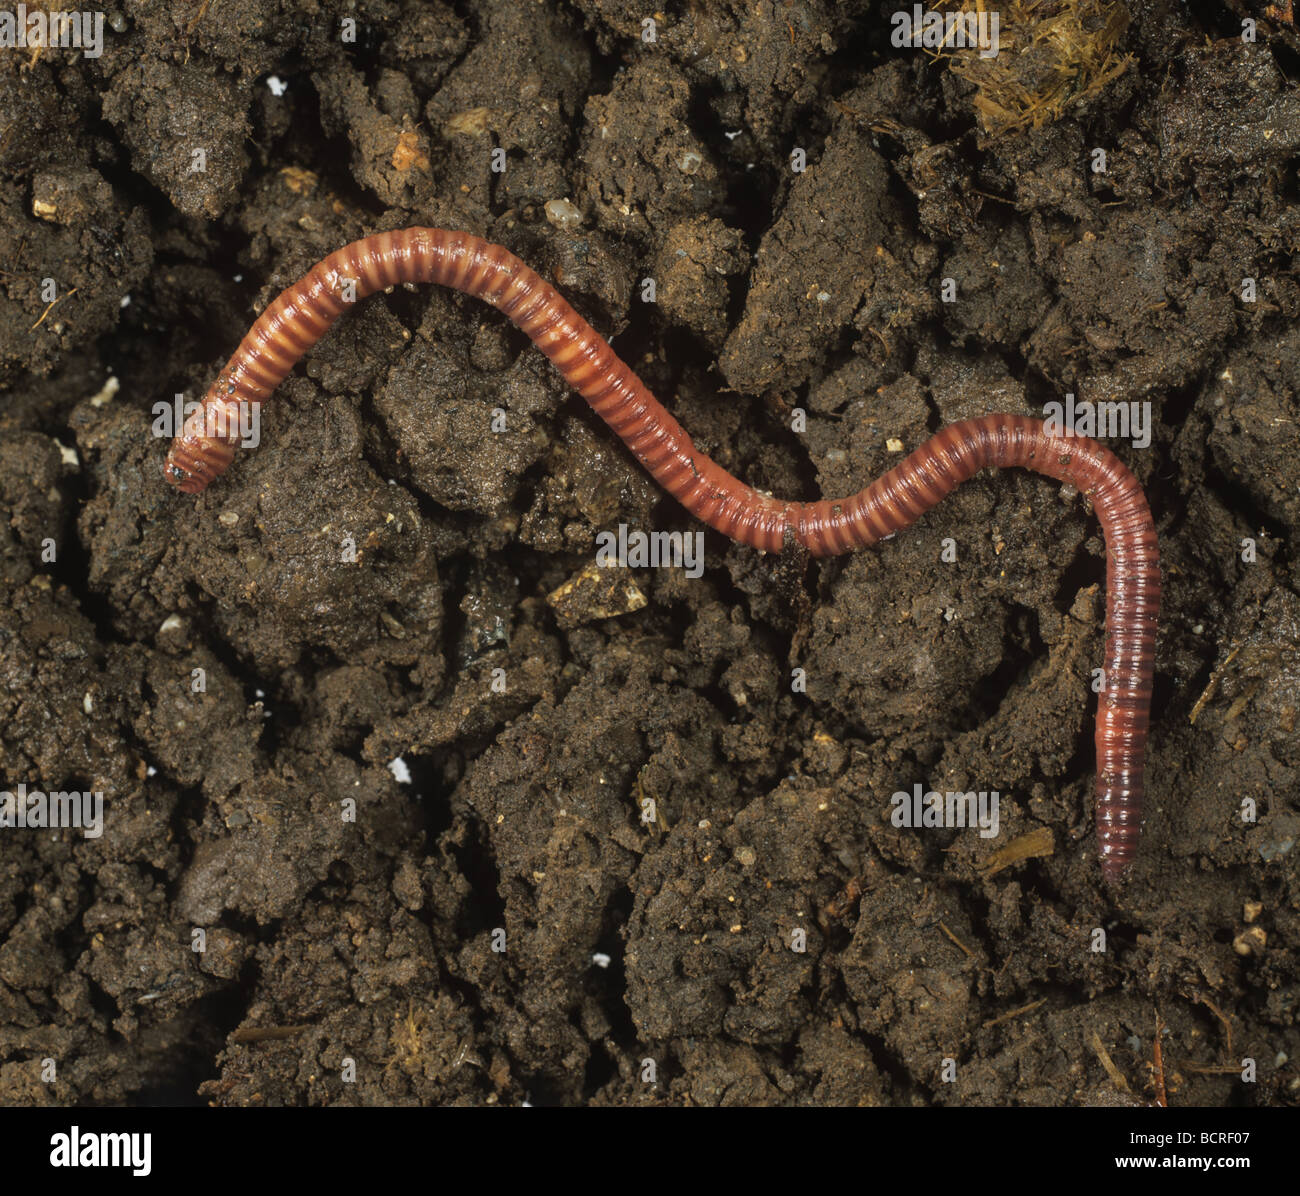 Redworm brandling or tiger worm Eisenia foetida on soil surface Stock Photo